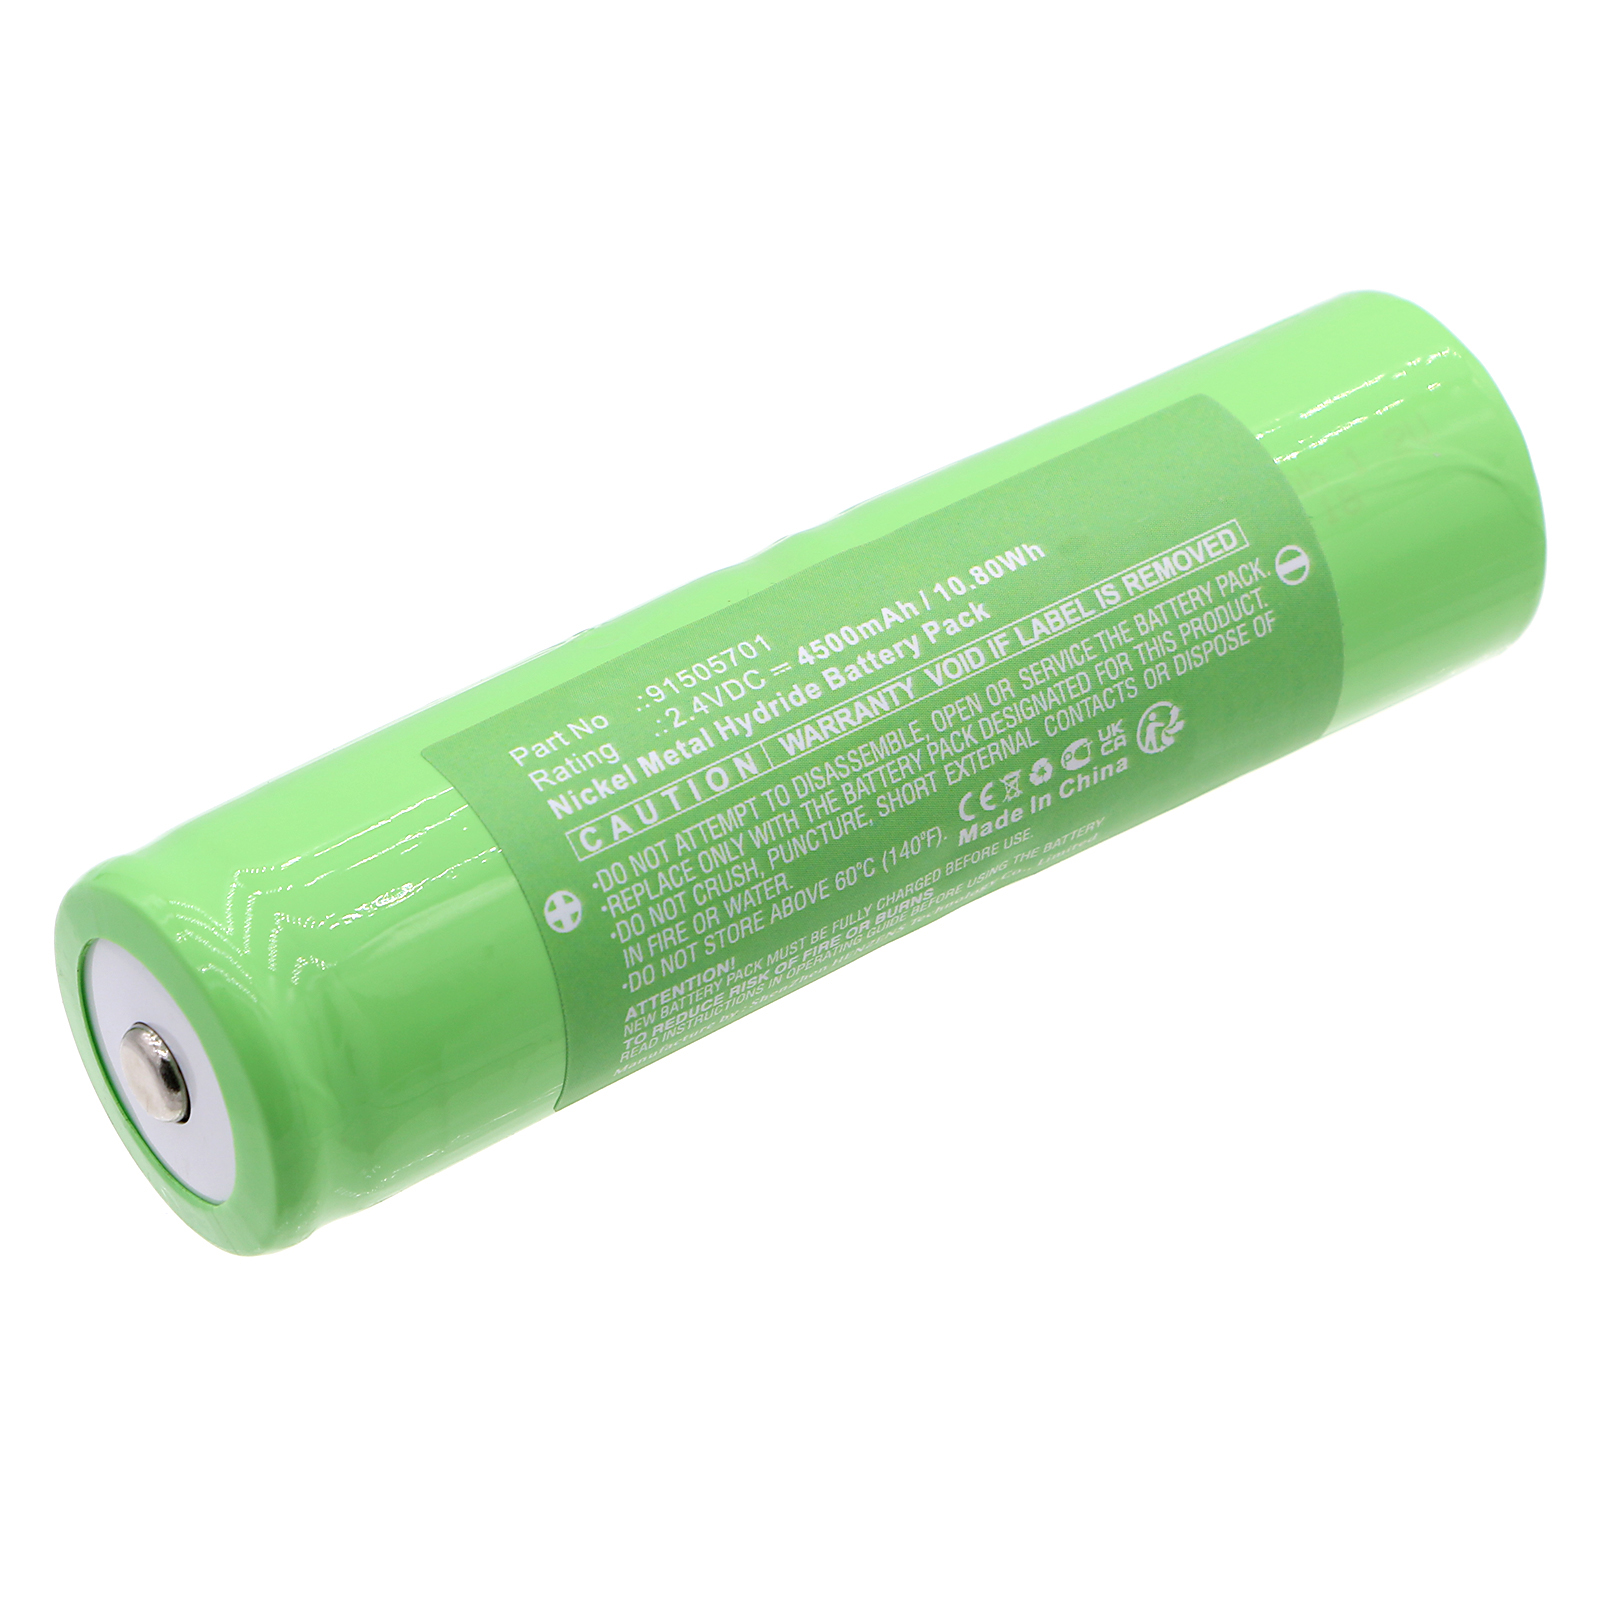 Batteries for LeicaEquipment